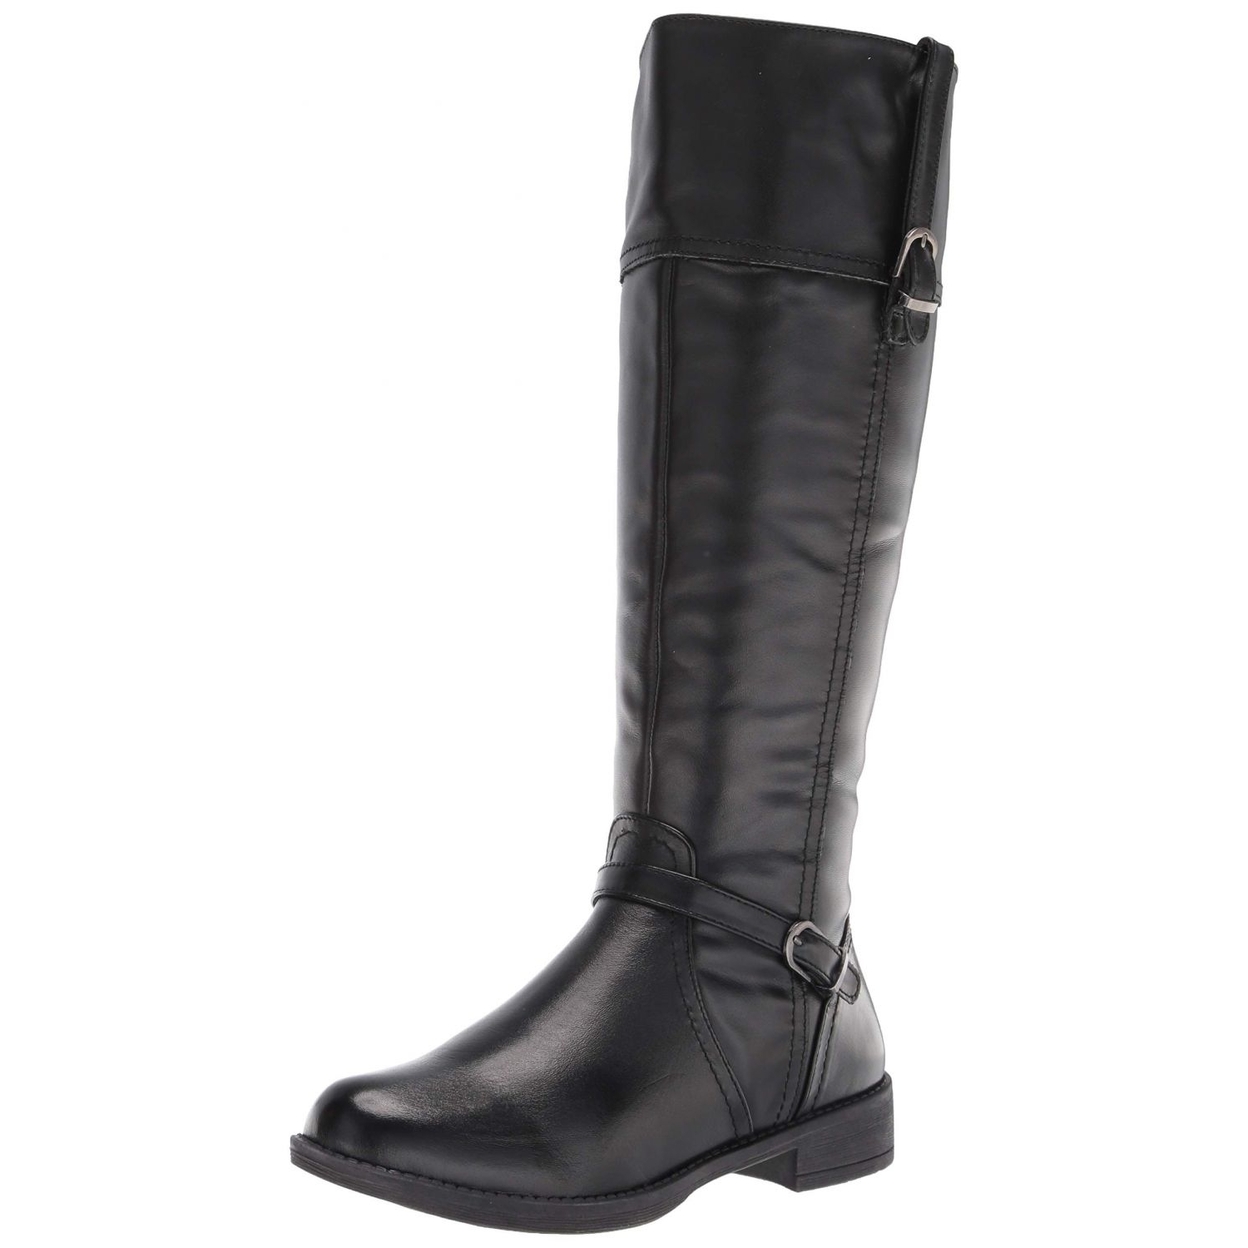 Propet Womens Tasha Zippered Casual Boots Knee High Low Heel 1-2 - Black BROWN - BROWN, 7 Wide